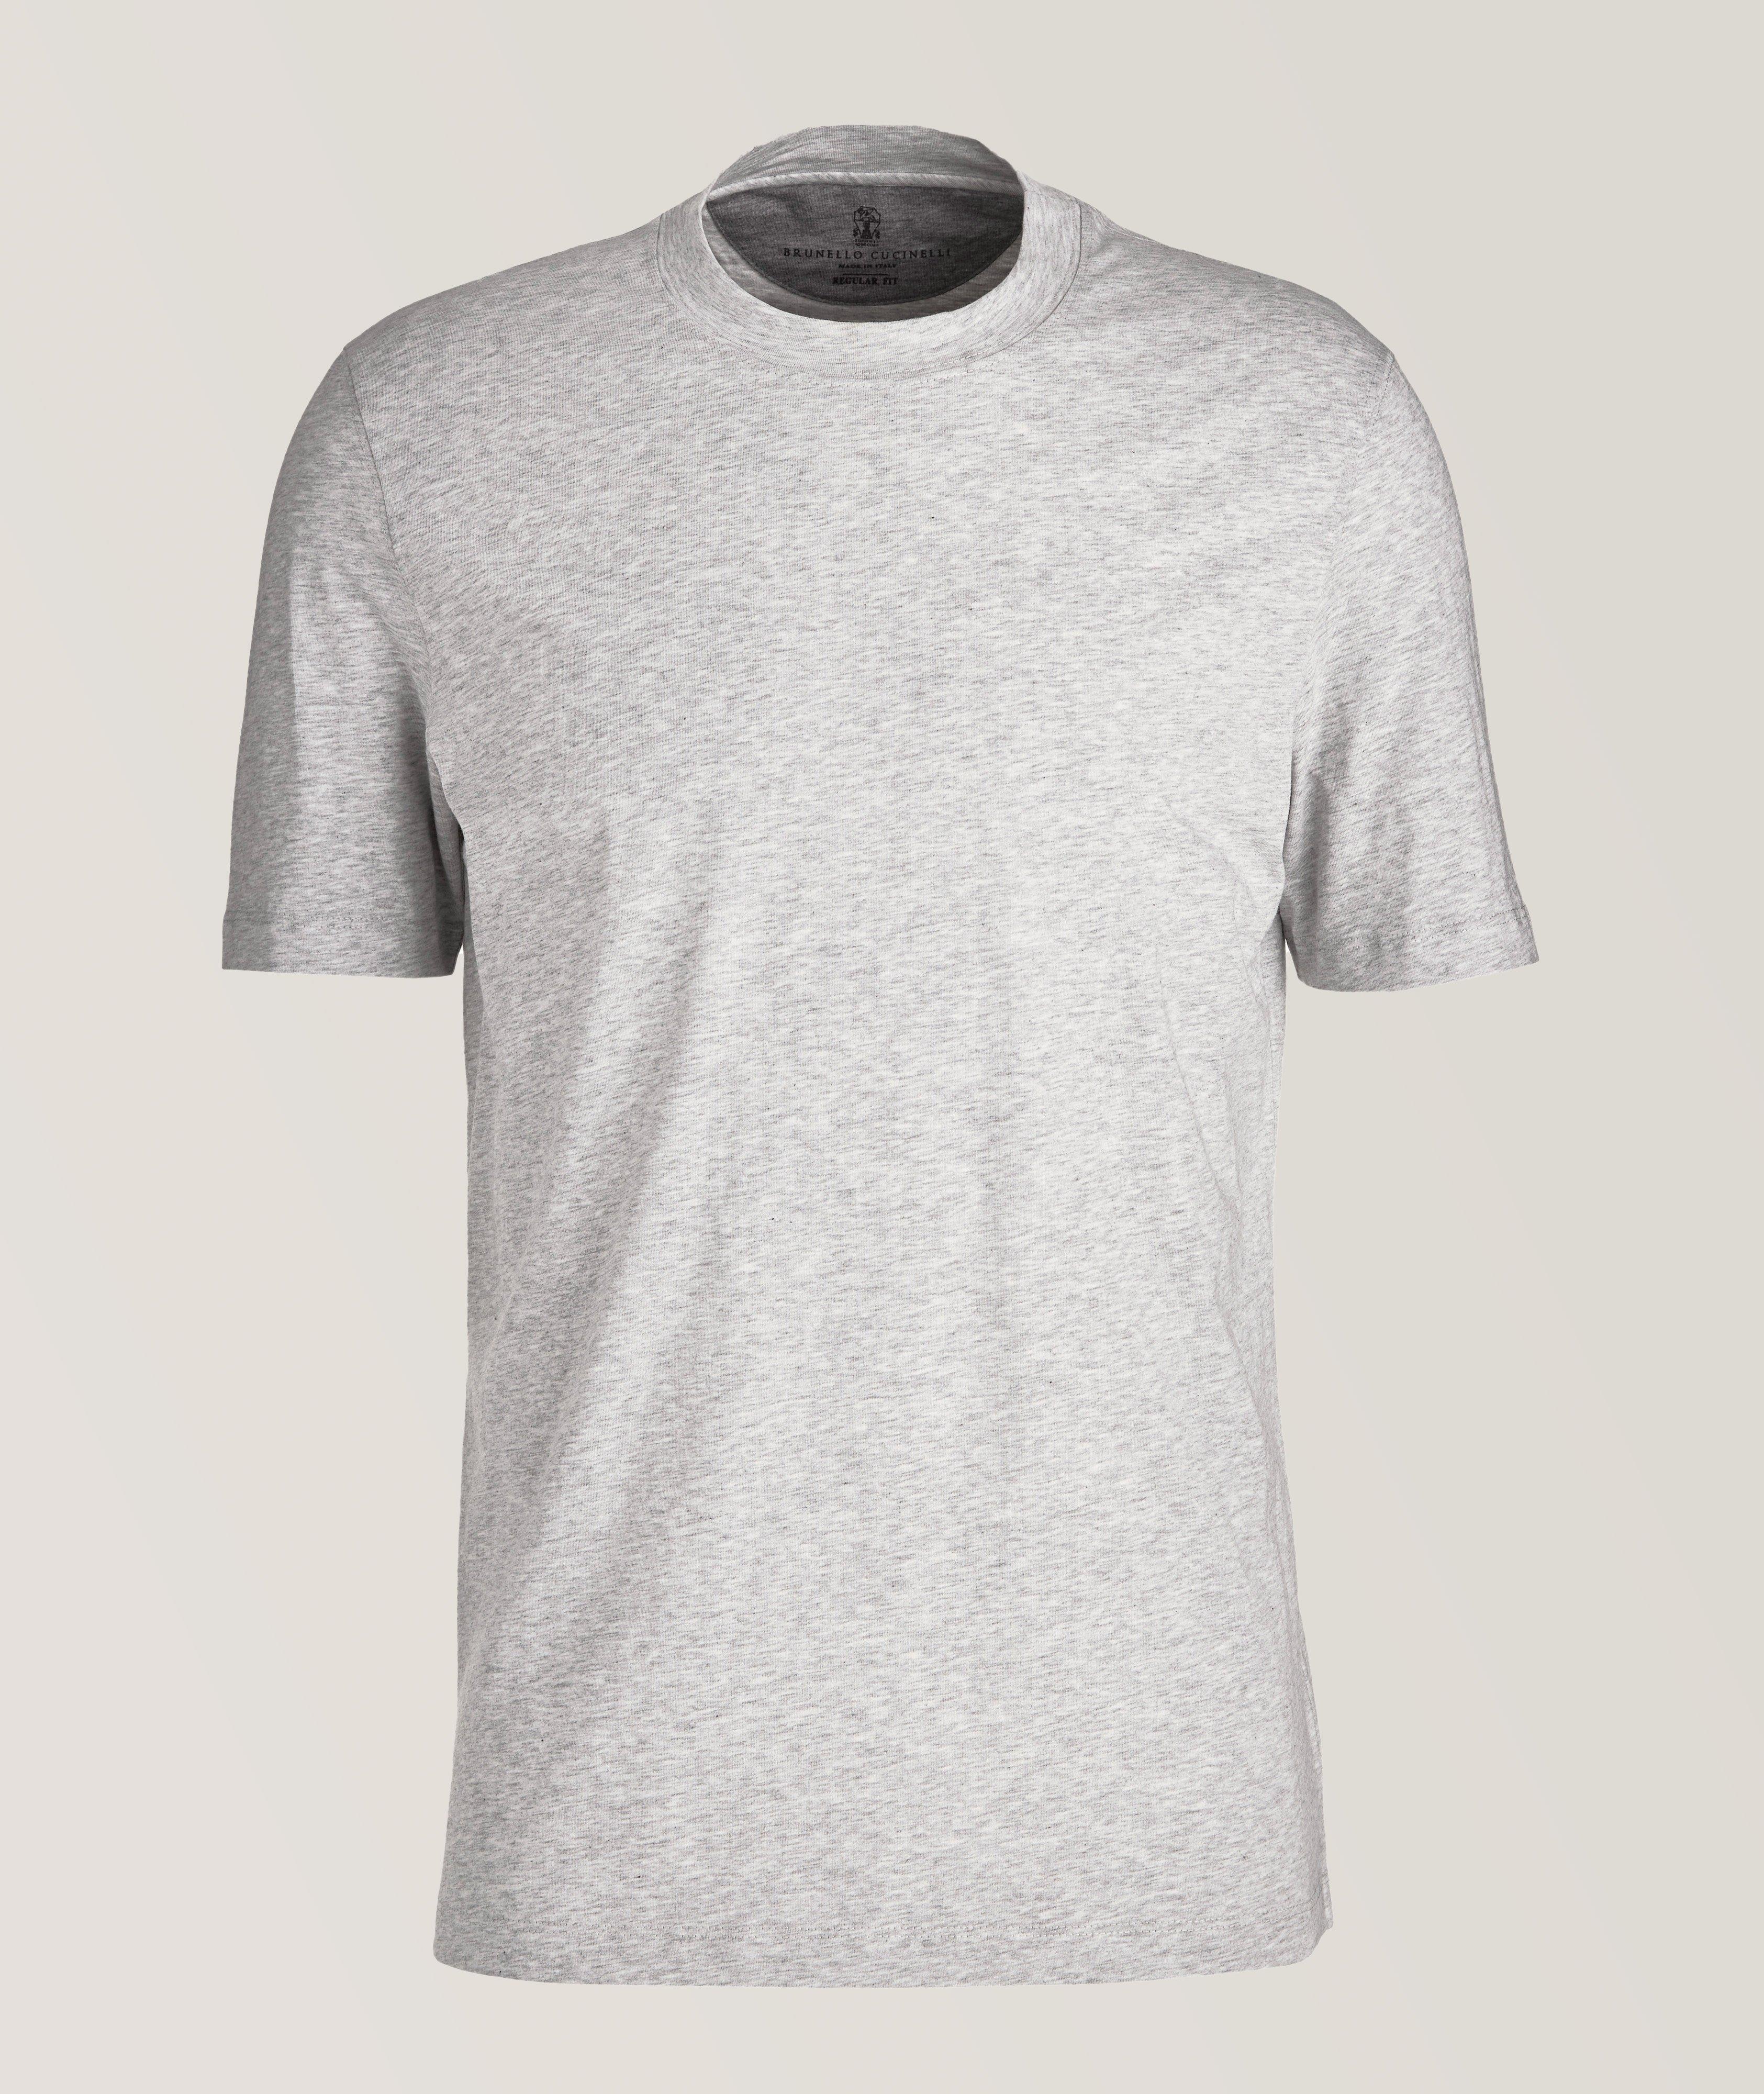 Regular Fit Cotton Crew Neck T-Shirt image 0